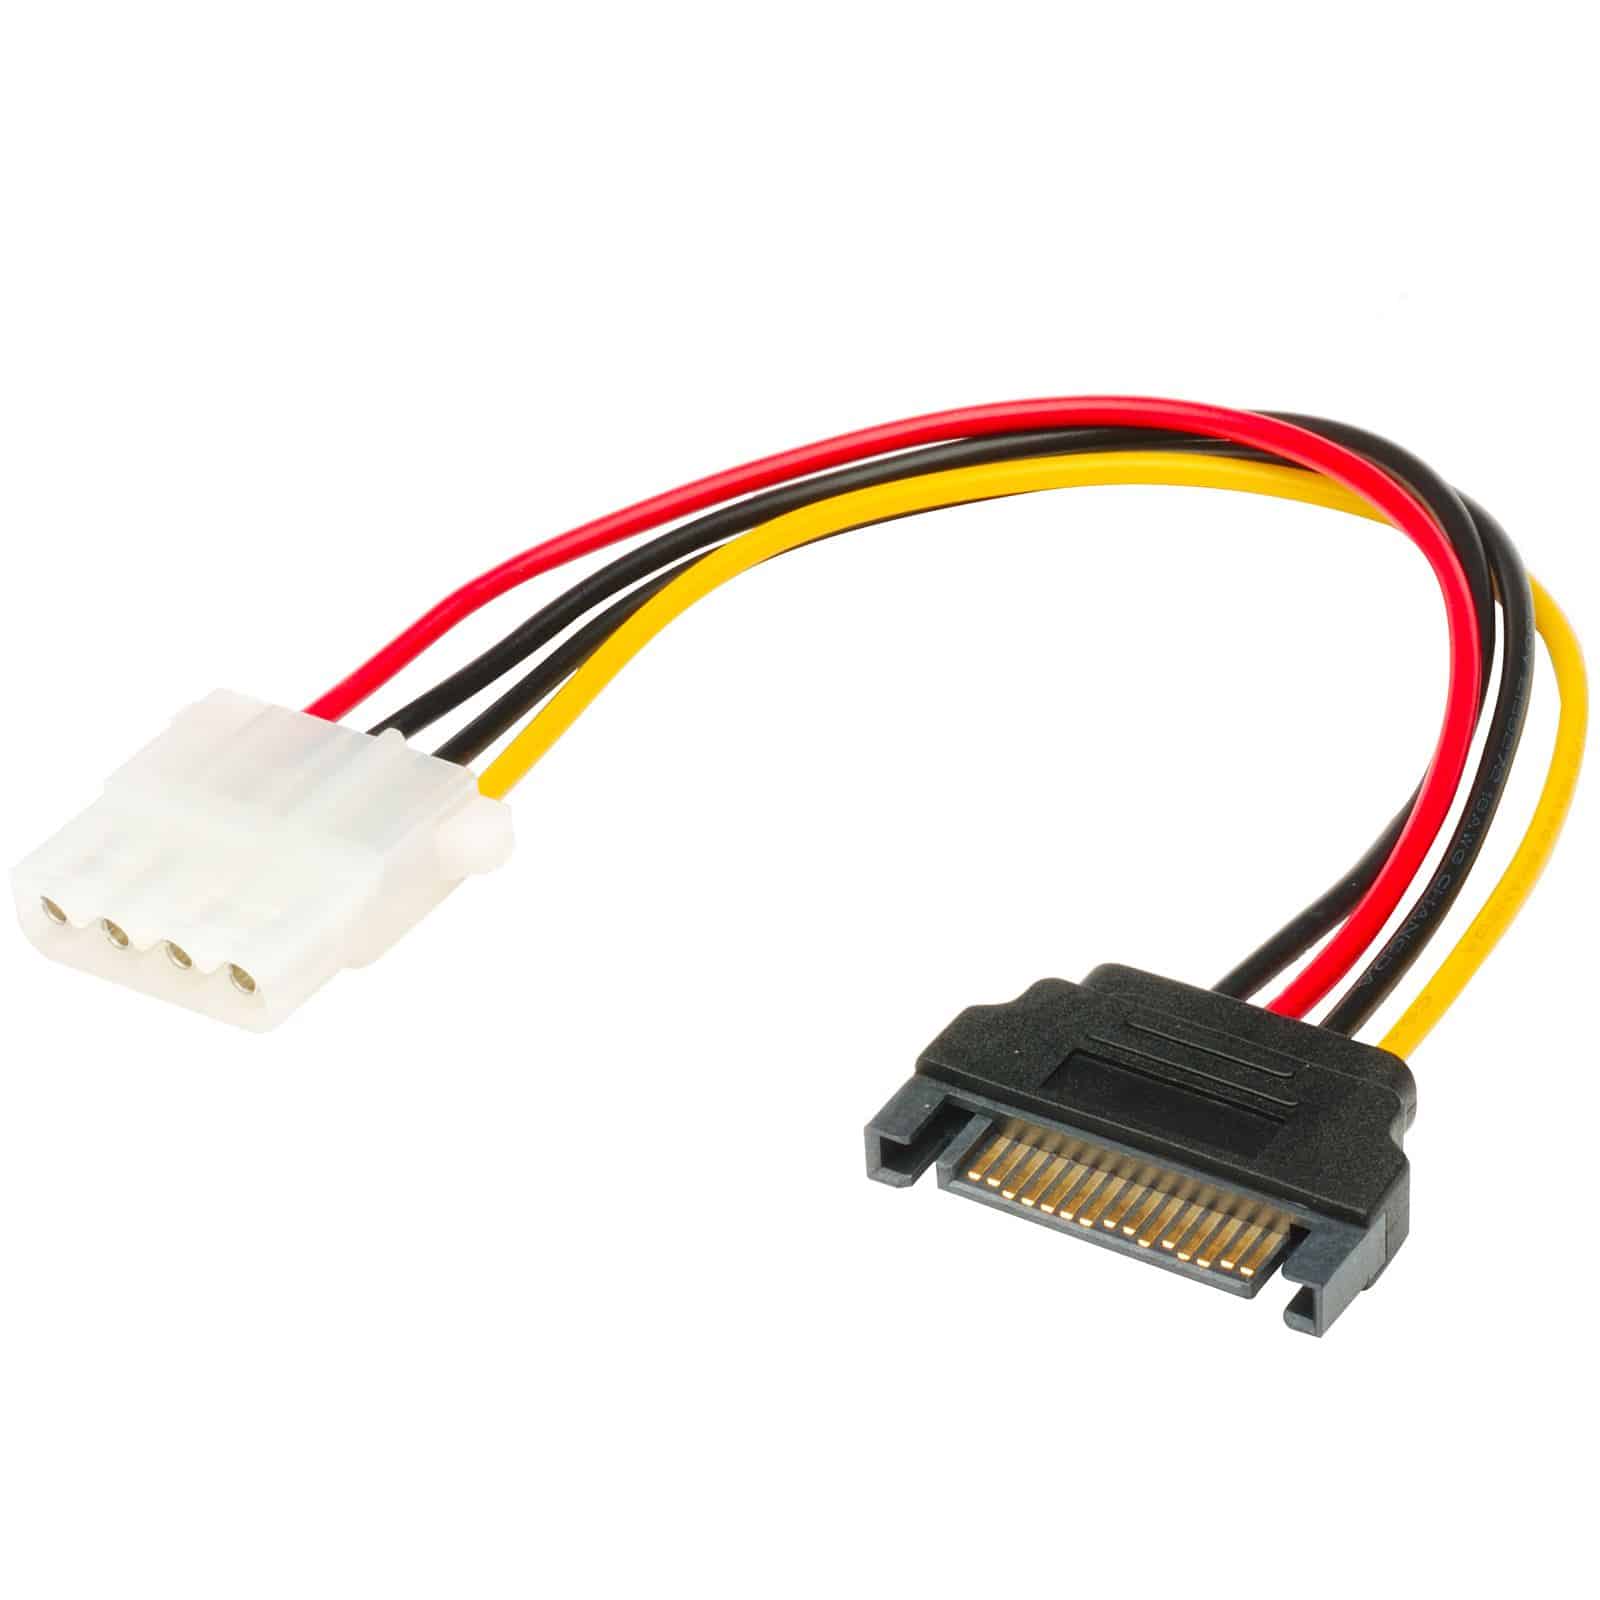 SATA PSU Power to 4pin Molex Connector adaptor